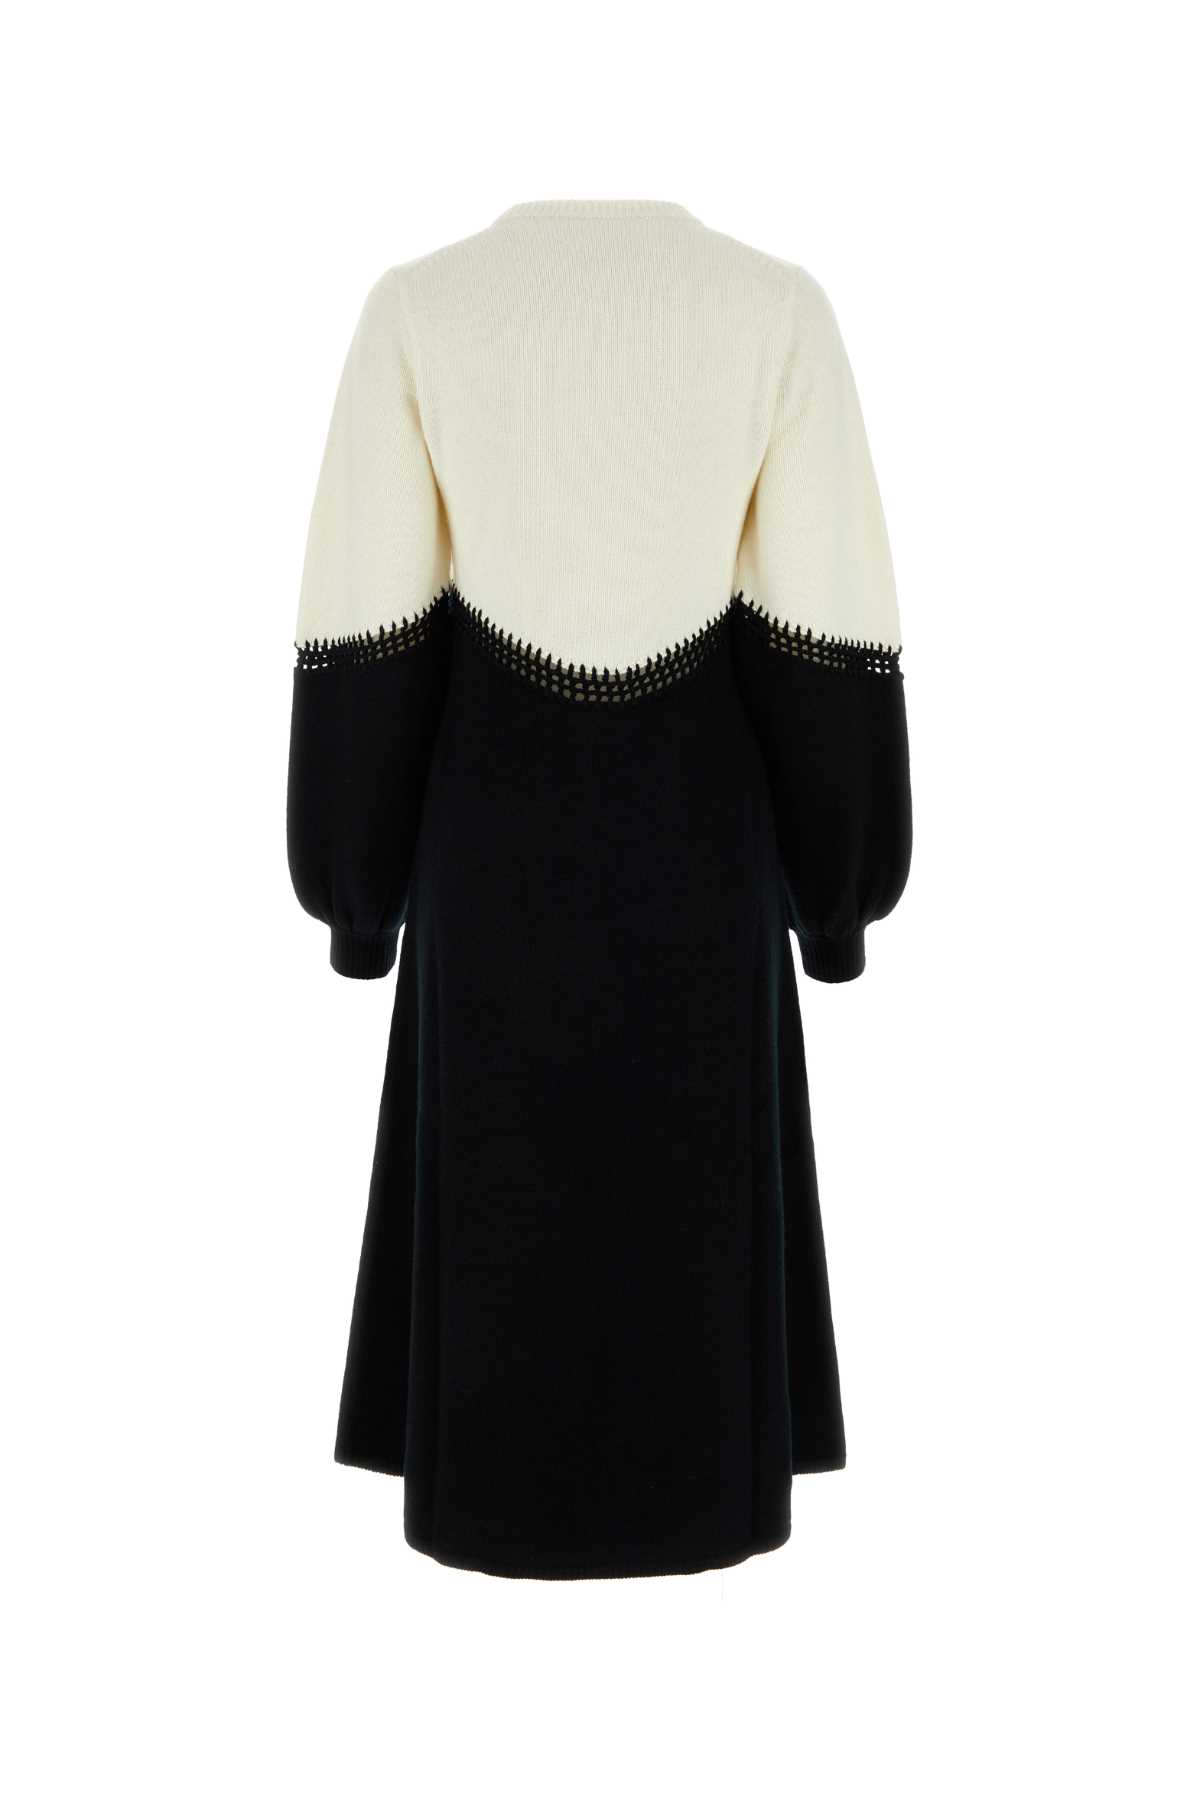 Chloé Two-tone Wool Blend Sweater Dress In Blackwhite1